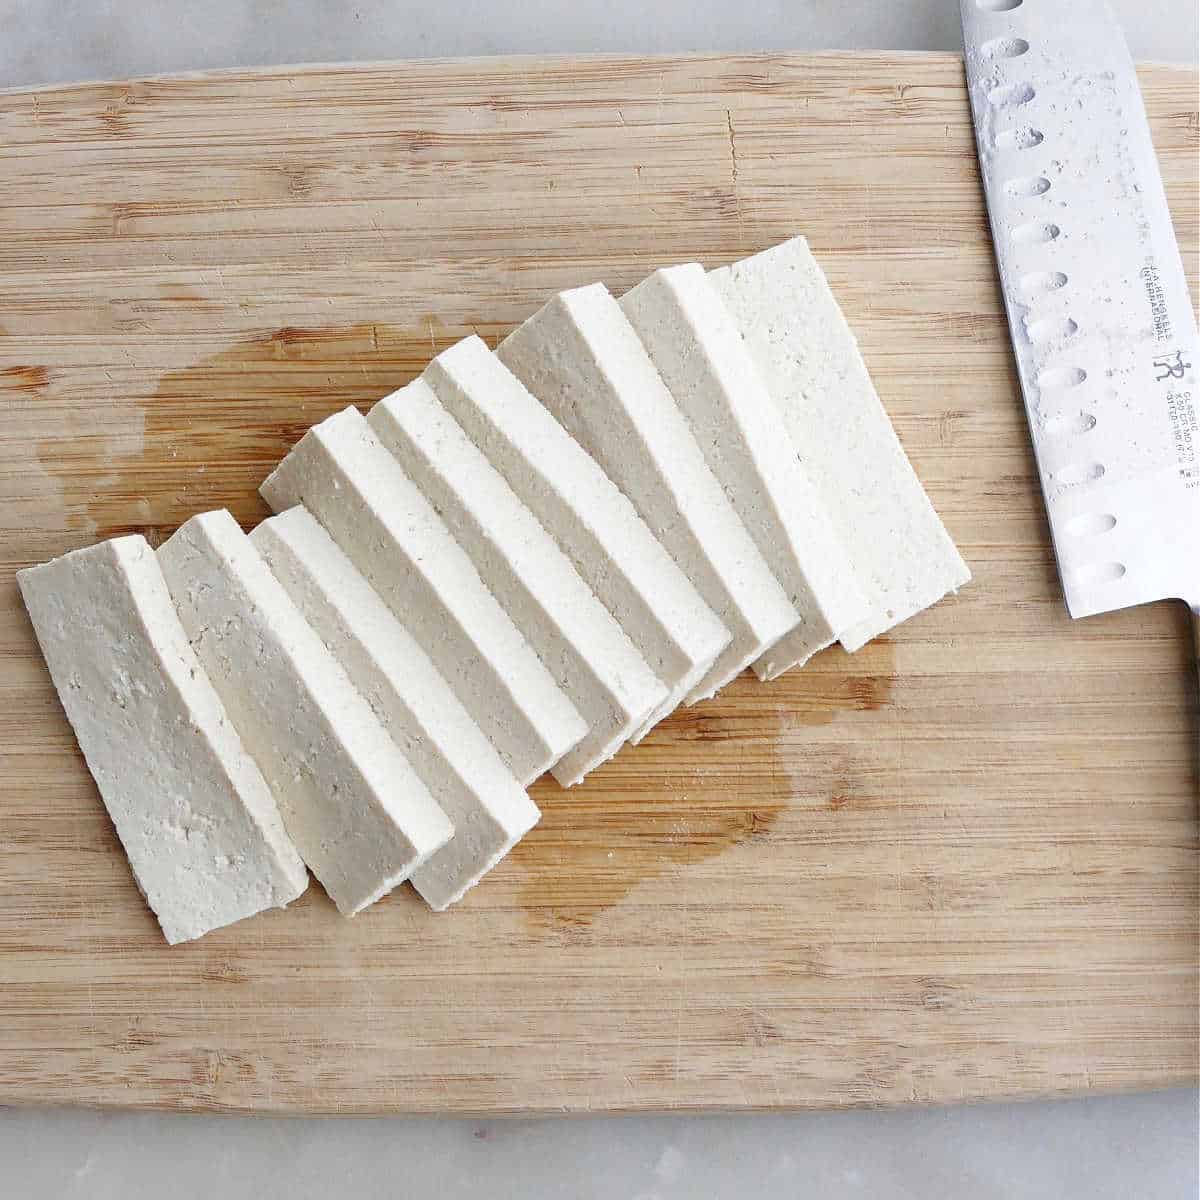 tofu cut into ¼-inch pieces on a cutting board